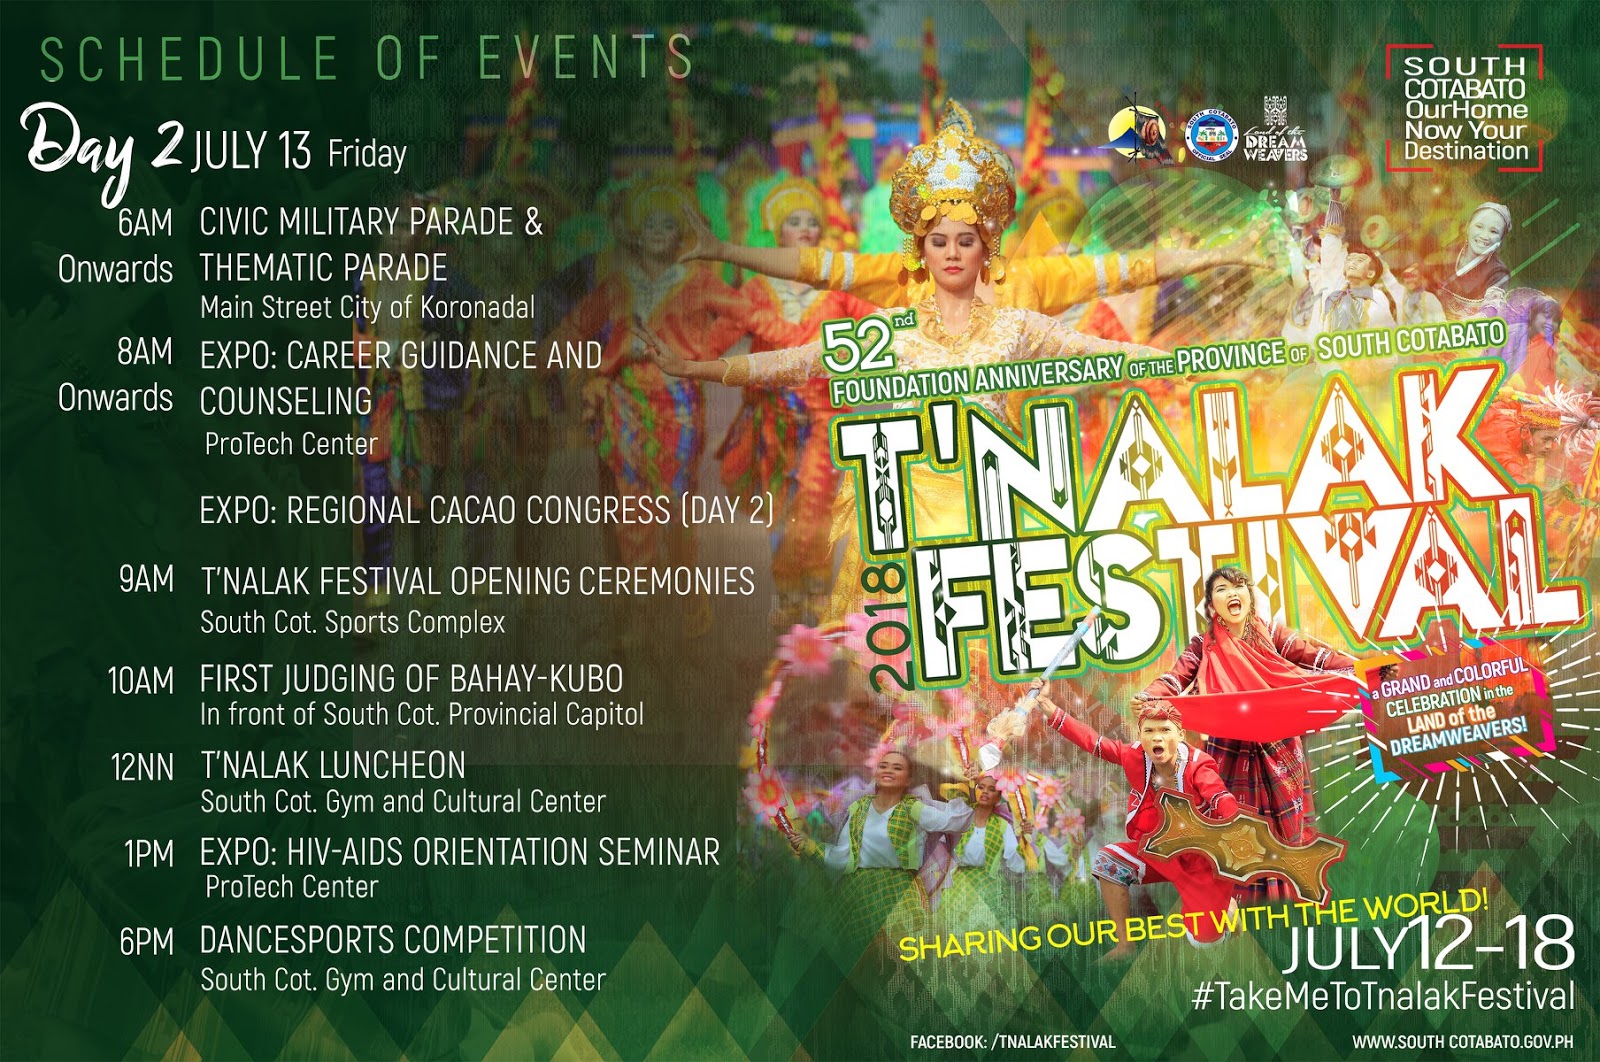 Tnalak Festival na naman! See schedule of activities here